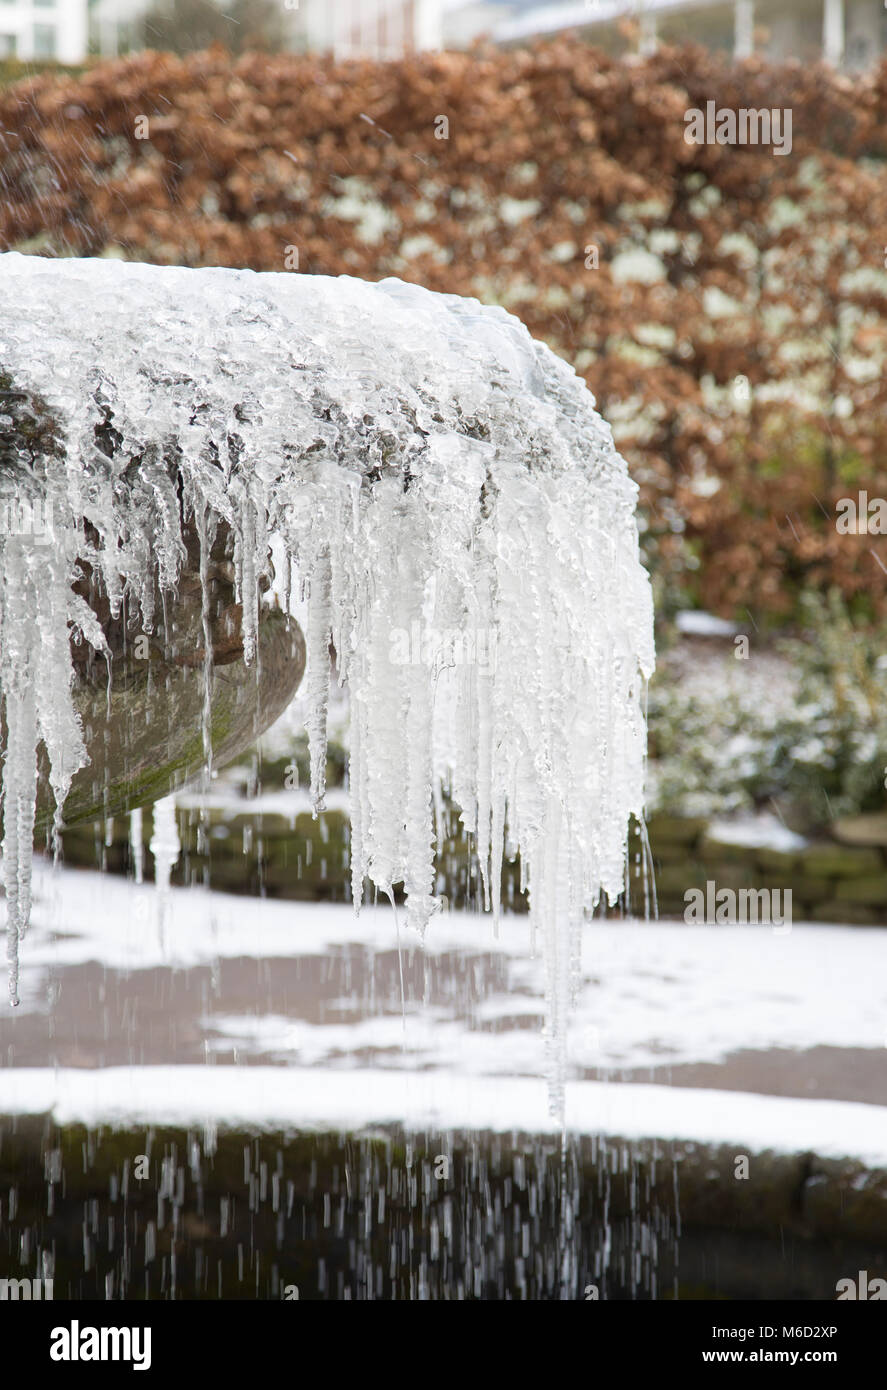 Birmingham's Botanical Gardens. 28th Feb, 2018. UK Weather: Frozen fountain at Birmingham's Botanical Gardens Credit: lisa robinson/Alamy Live News Stock Photo